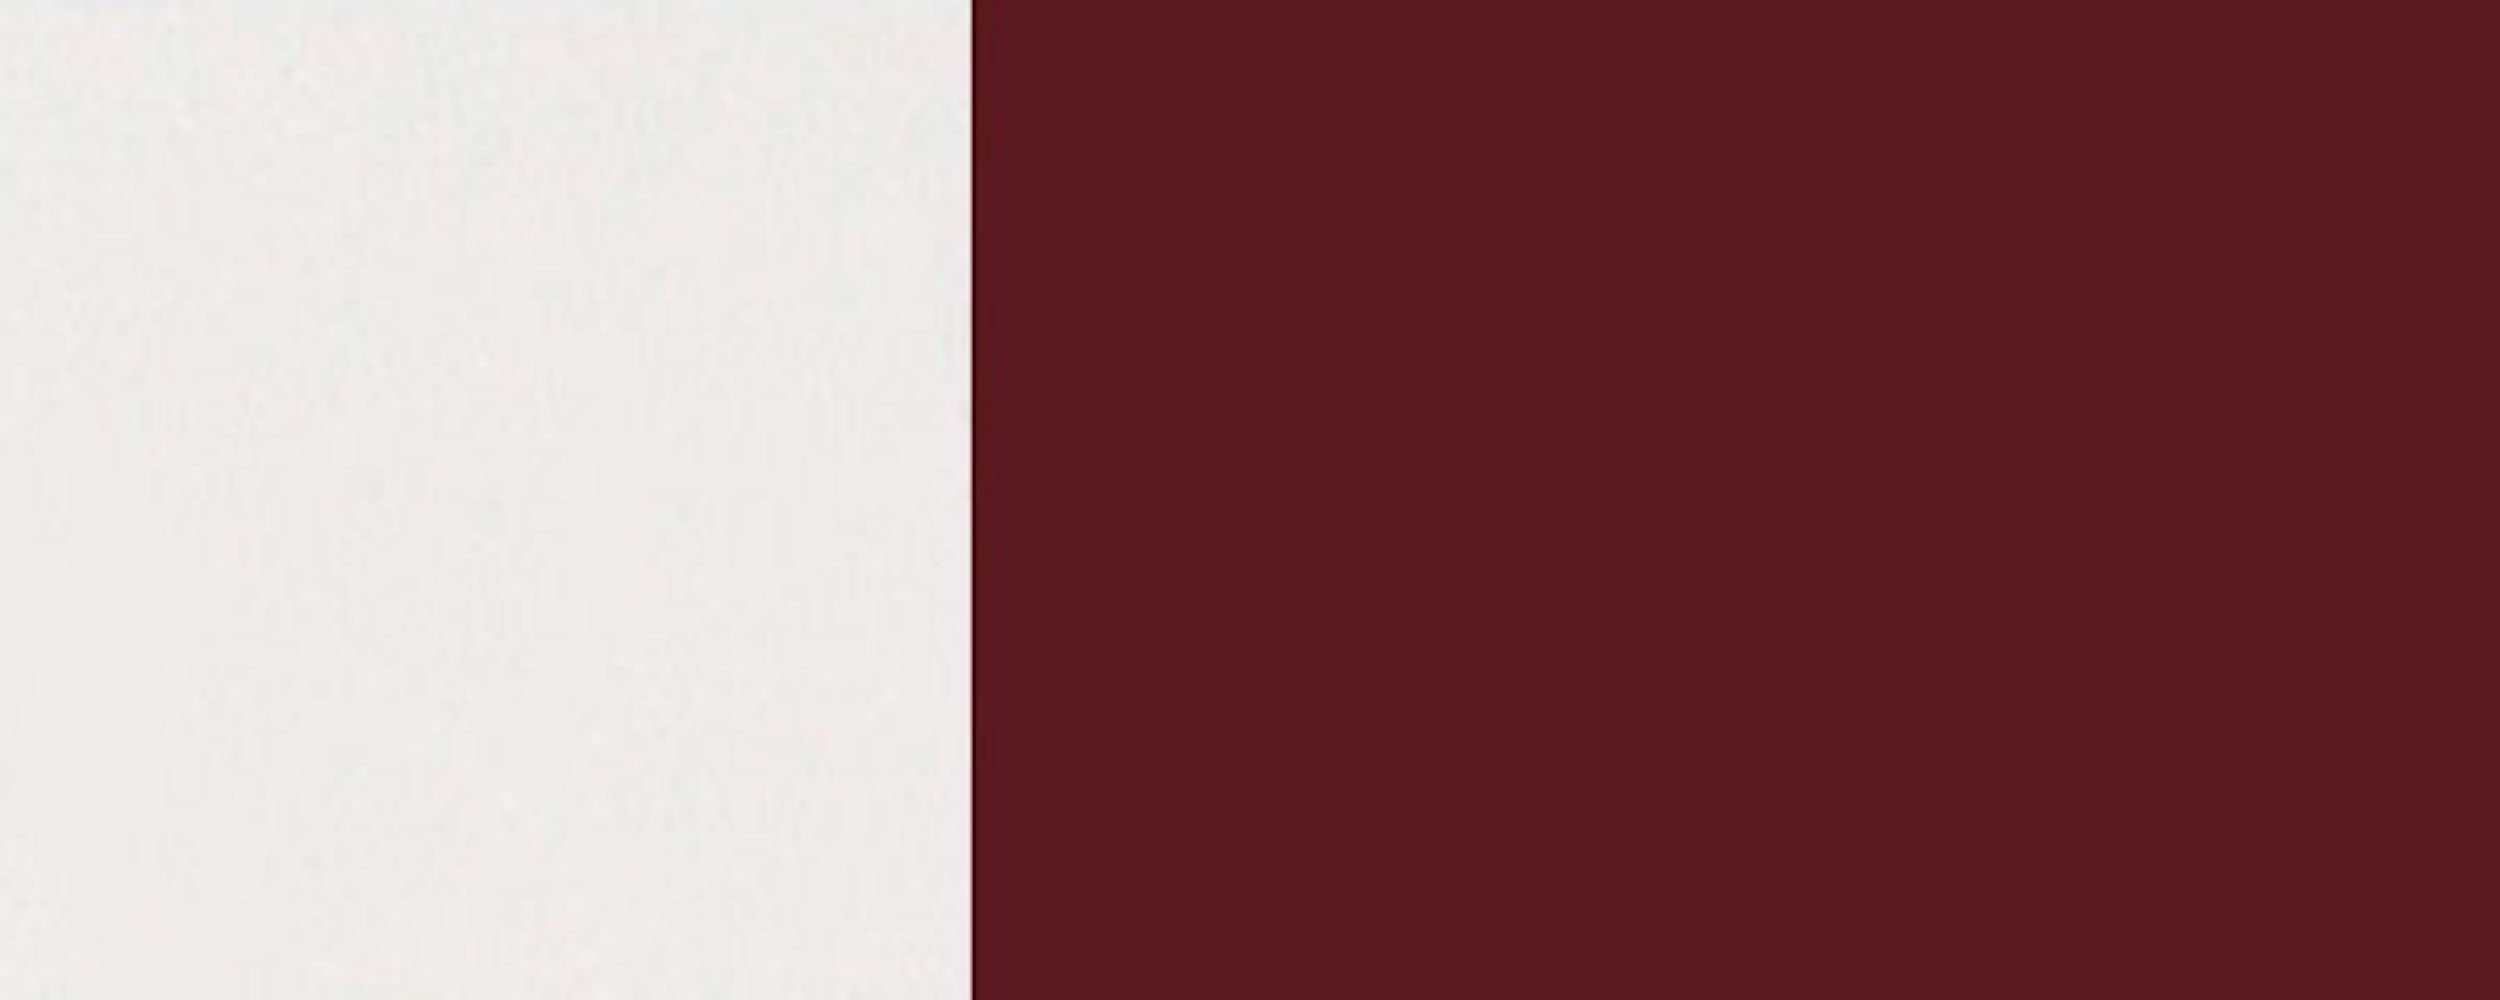 Unterschrank & grifflos 3005 Ausführung Front-, Feldmann-Wohnen RAL Korpusfarbe, Hochglanz wählbar Florence (Florence) Ausrichtung weinrot 84cm